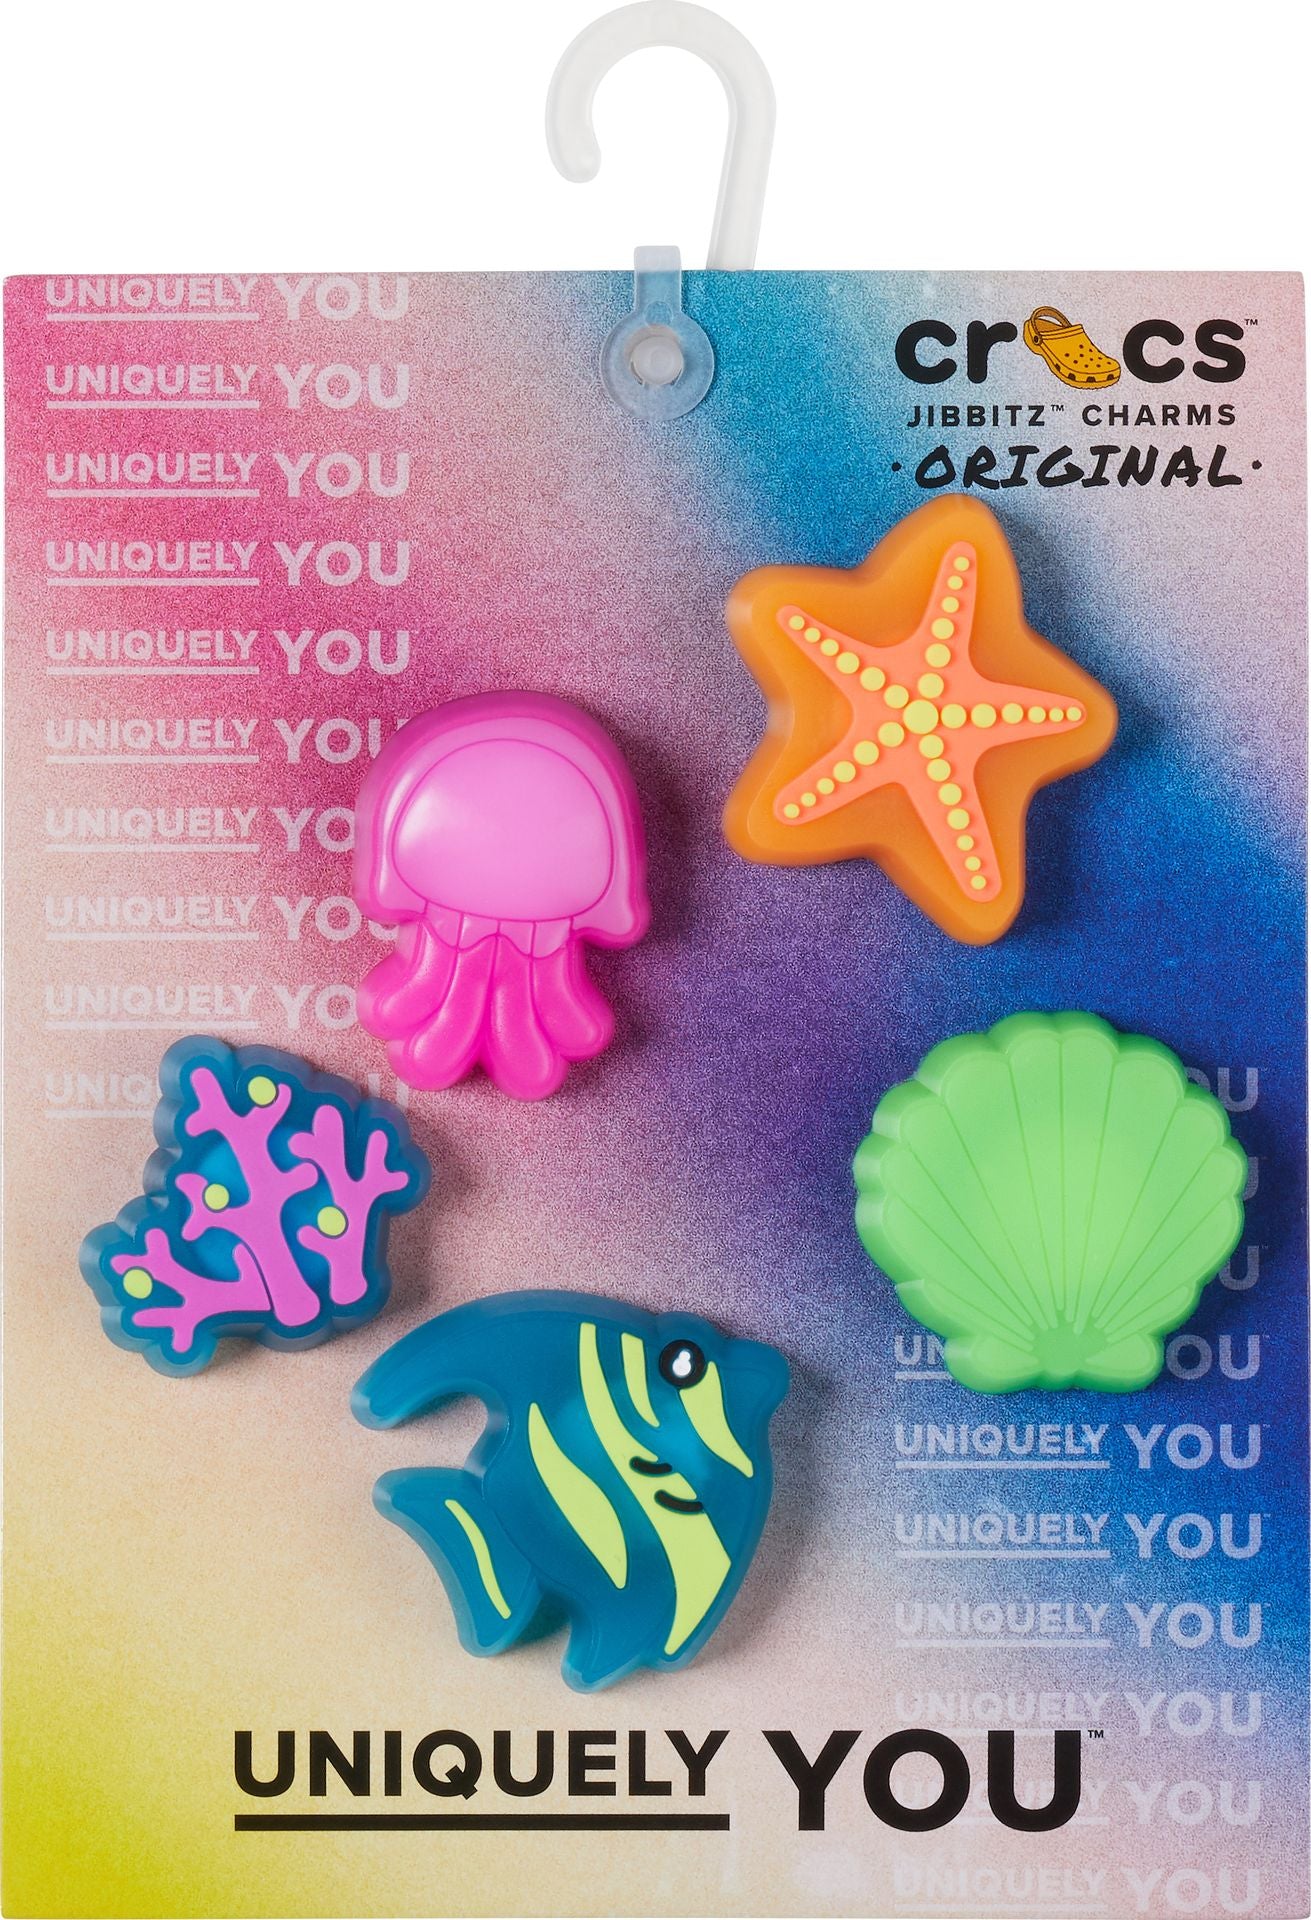 Under The Sea 3 Pack Jibbitz™ charms - Crocs